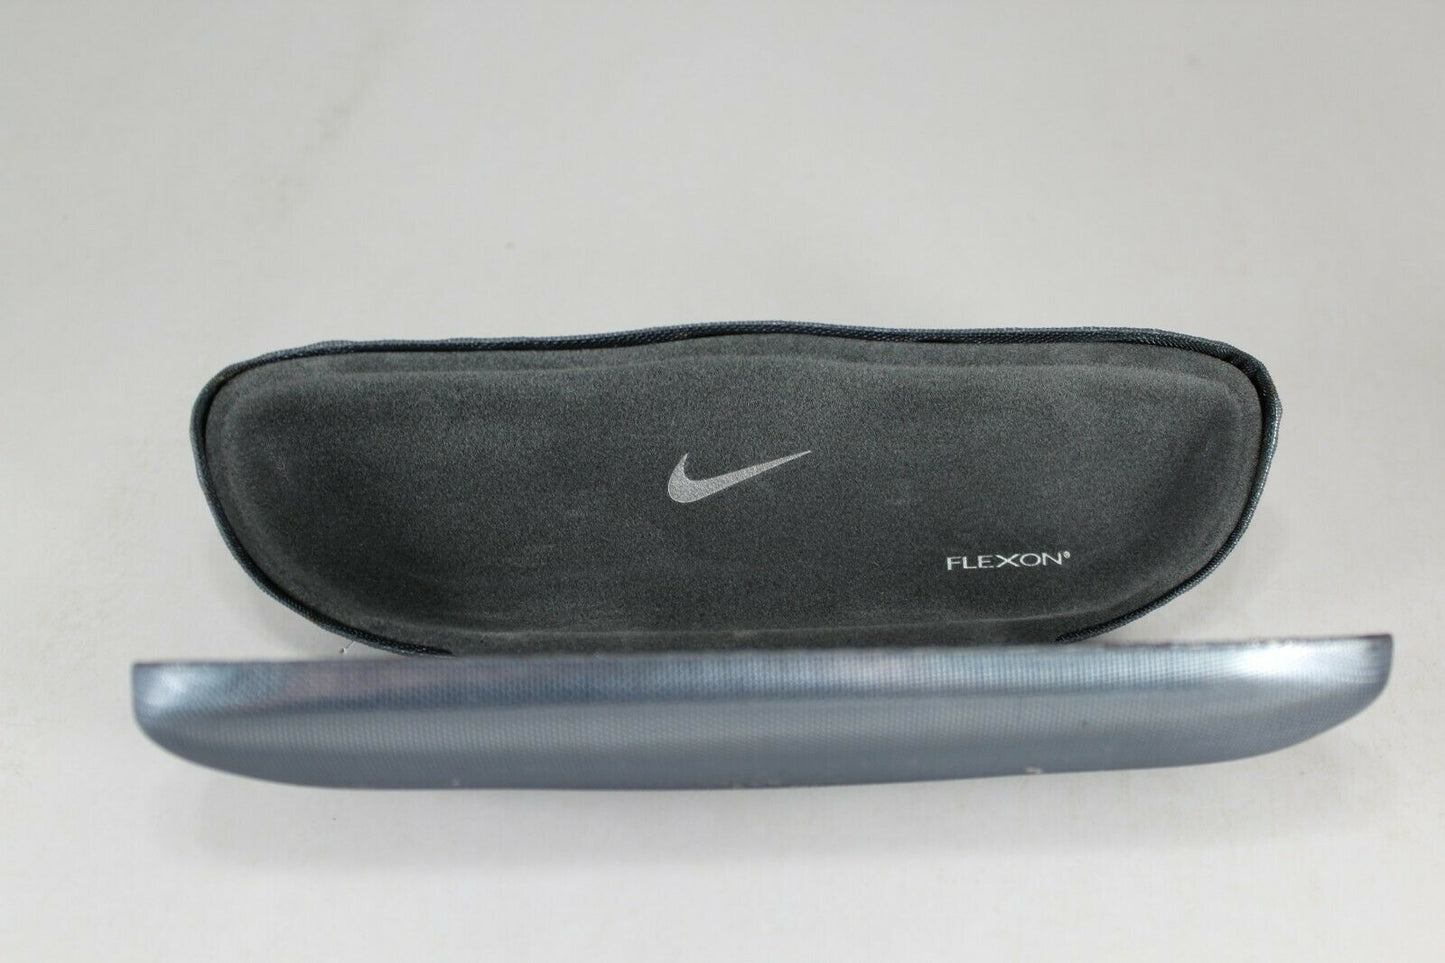 Nike Nike 7285-210 50mm New Eyeglasses